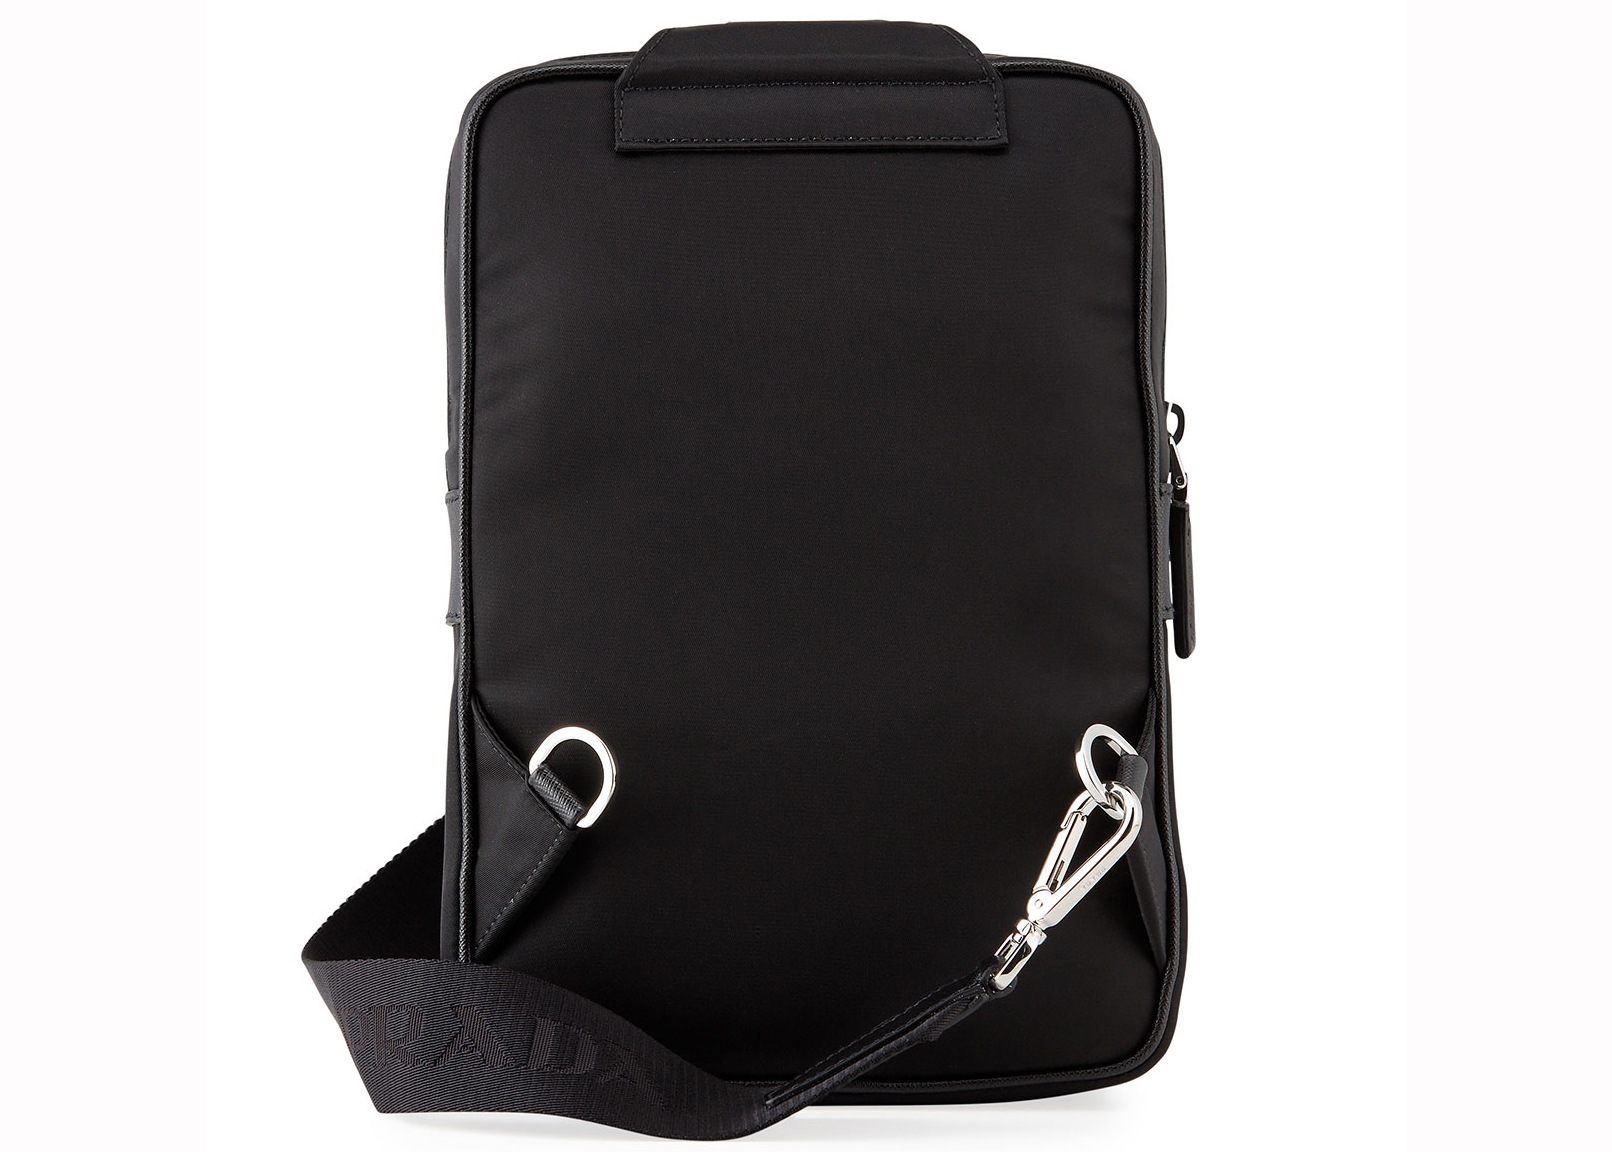 prada sling backpack